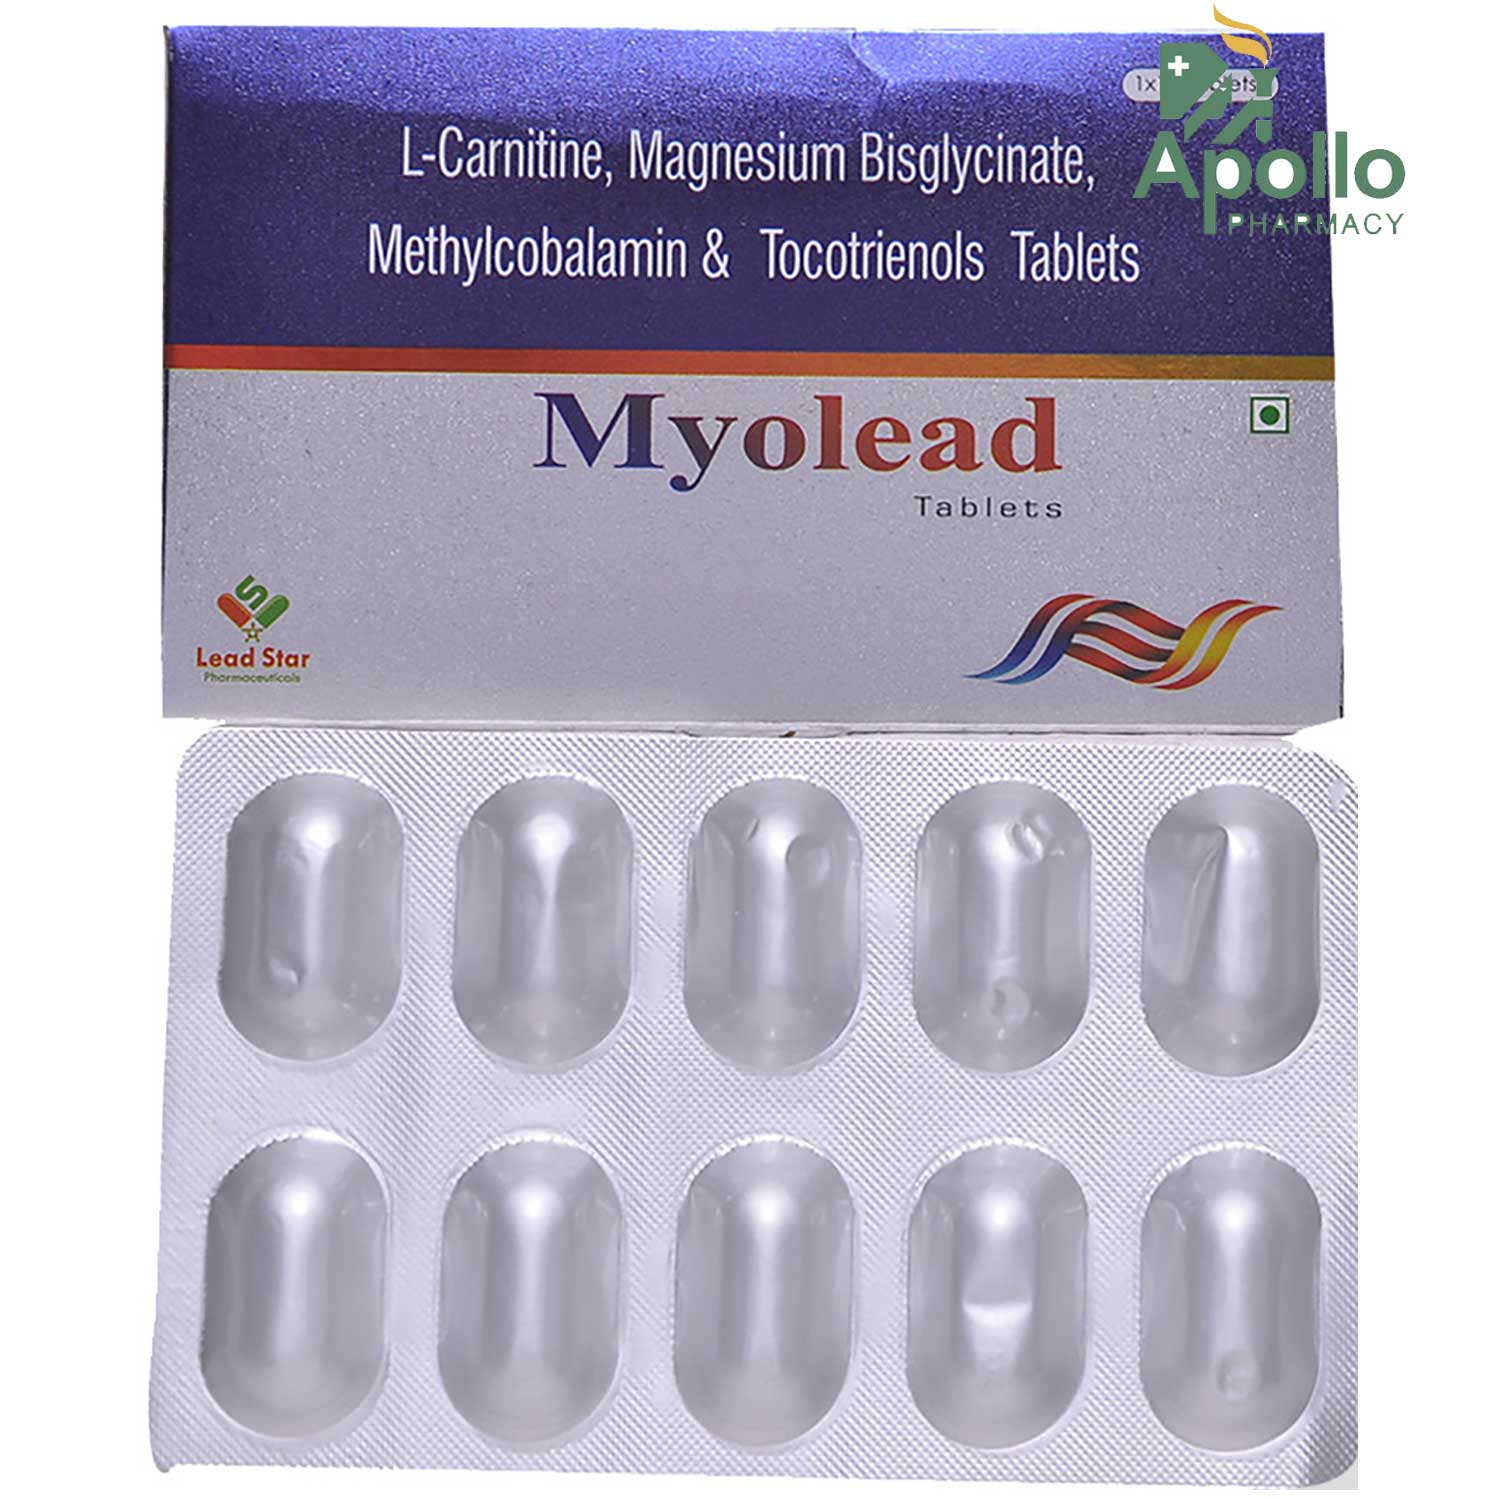 Myolead Tablet 10's, Pack of 10 TABLETS